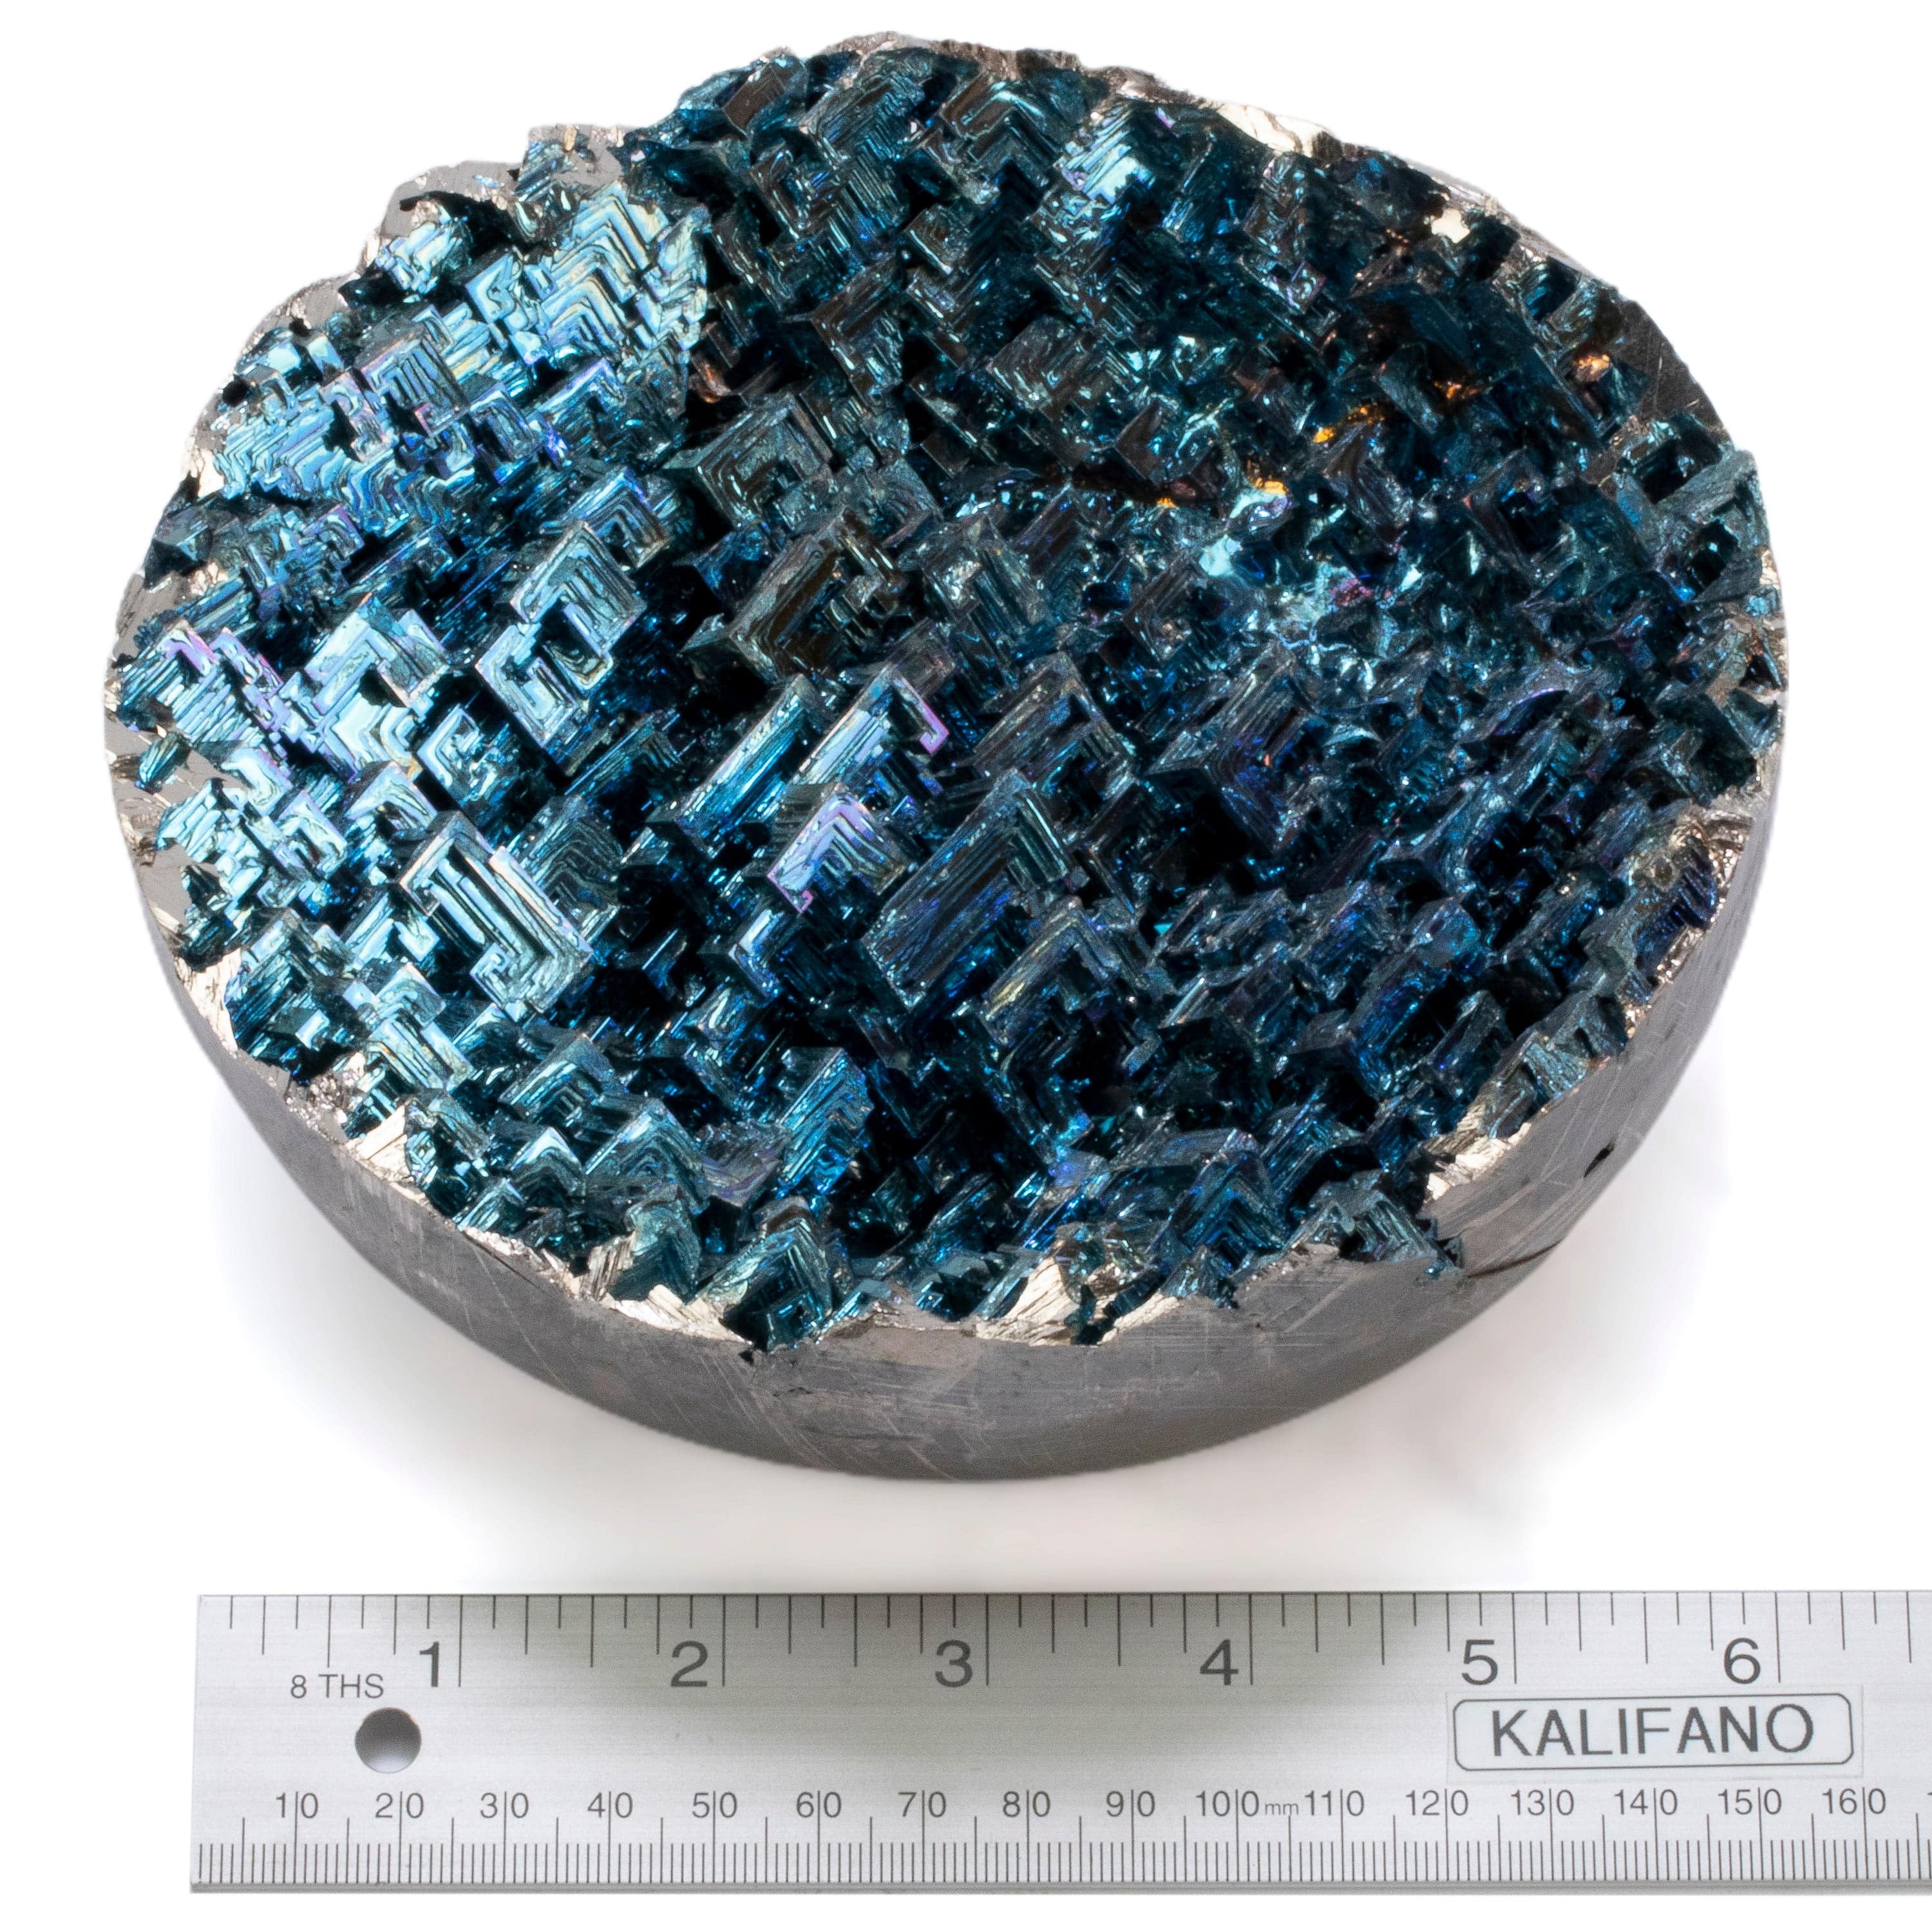 KALIFANO TUMBLED STONES Blue Bismuth Geode - 7" / 2,560 grams BISMUTH-BLG-L-002